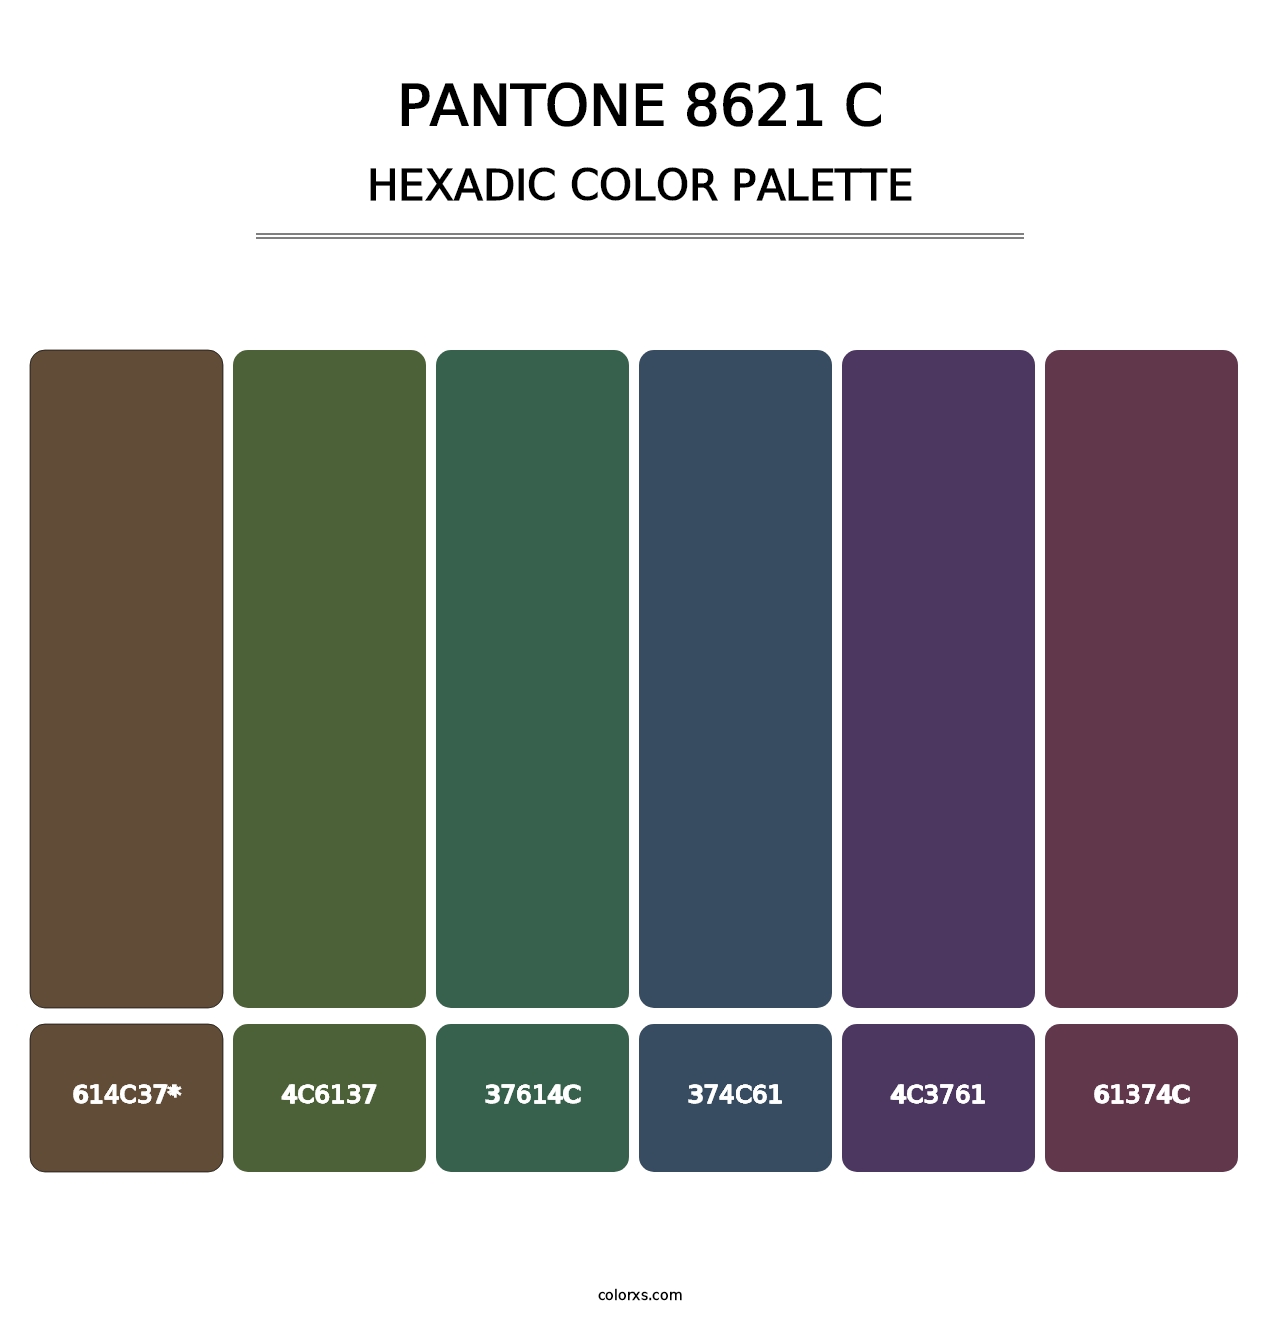 PANTONE 8621 C - Hexadic Color Palette